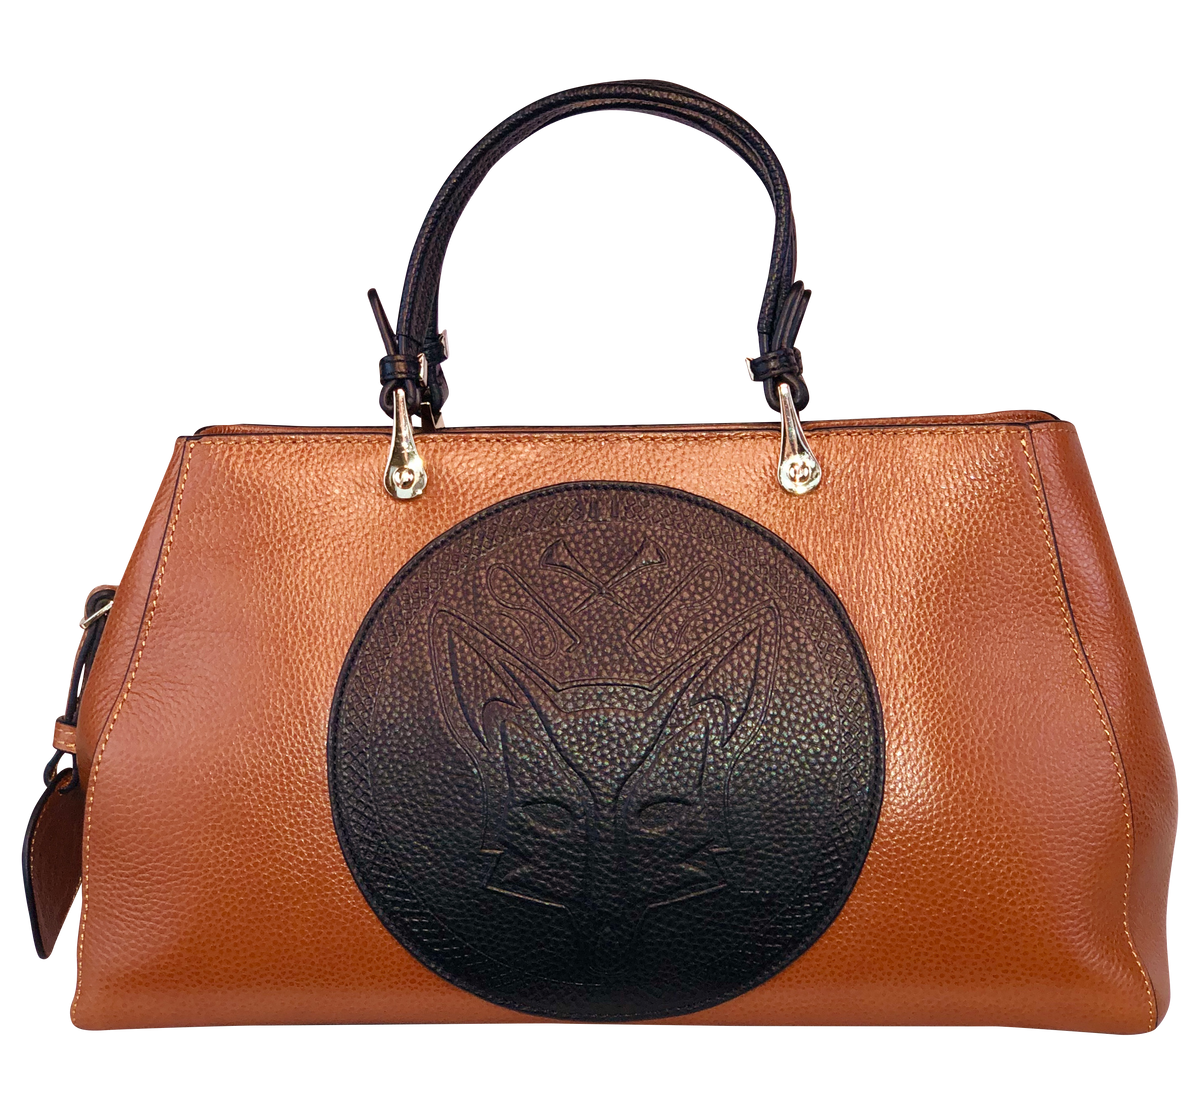 Tucker Tweed Leather Handbags Chestnut/Black / Foxhunting Sedgefield Legacy: Foxhunting